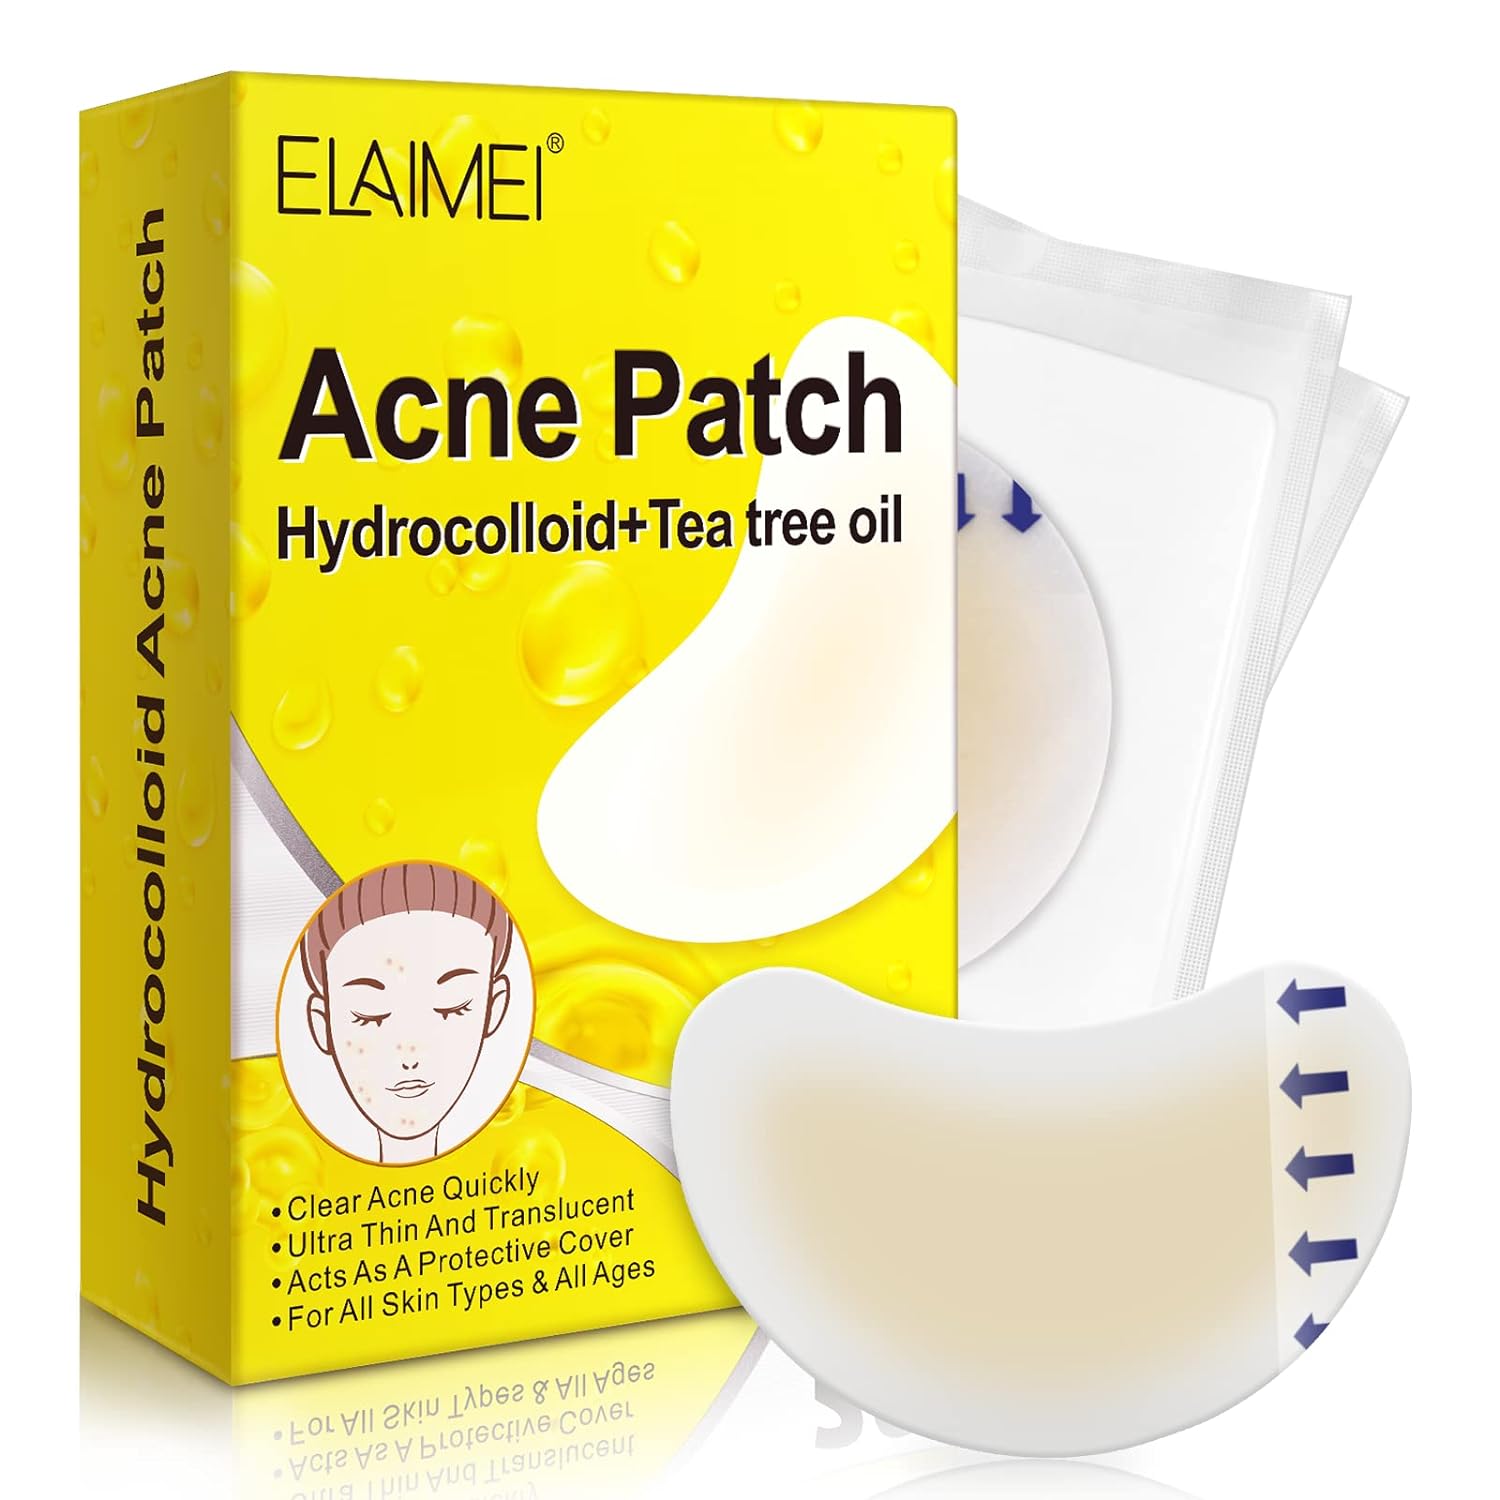 Hydrocolloid Acne Patch